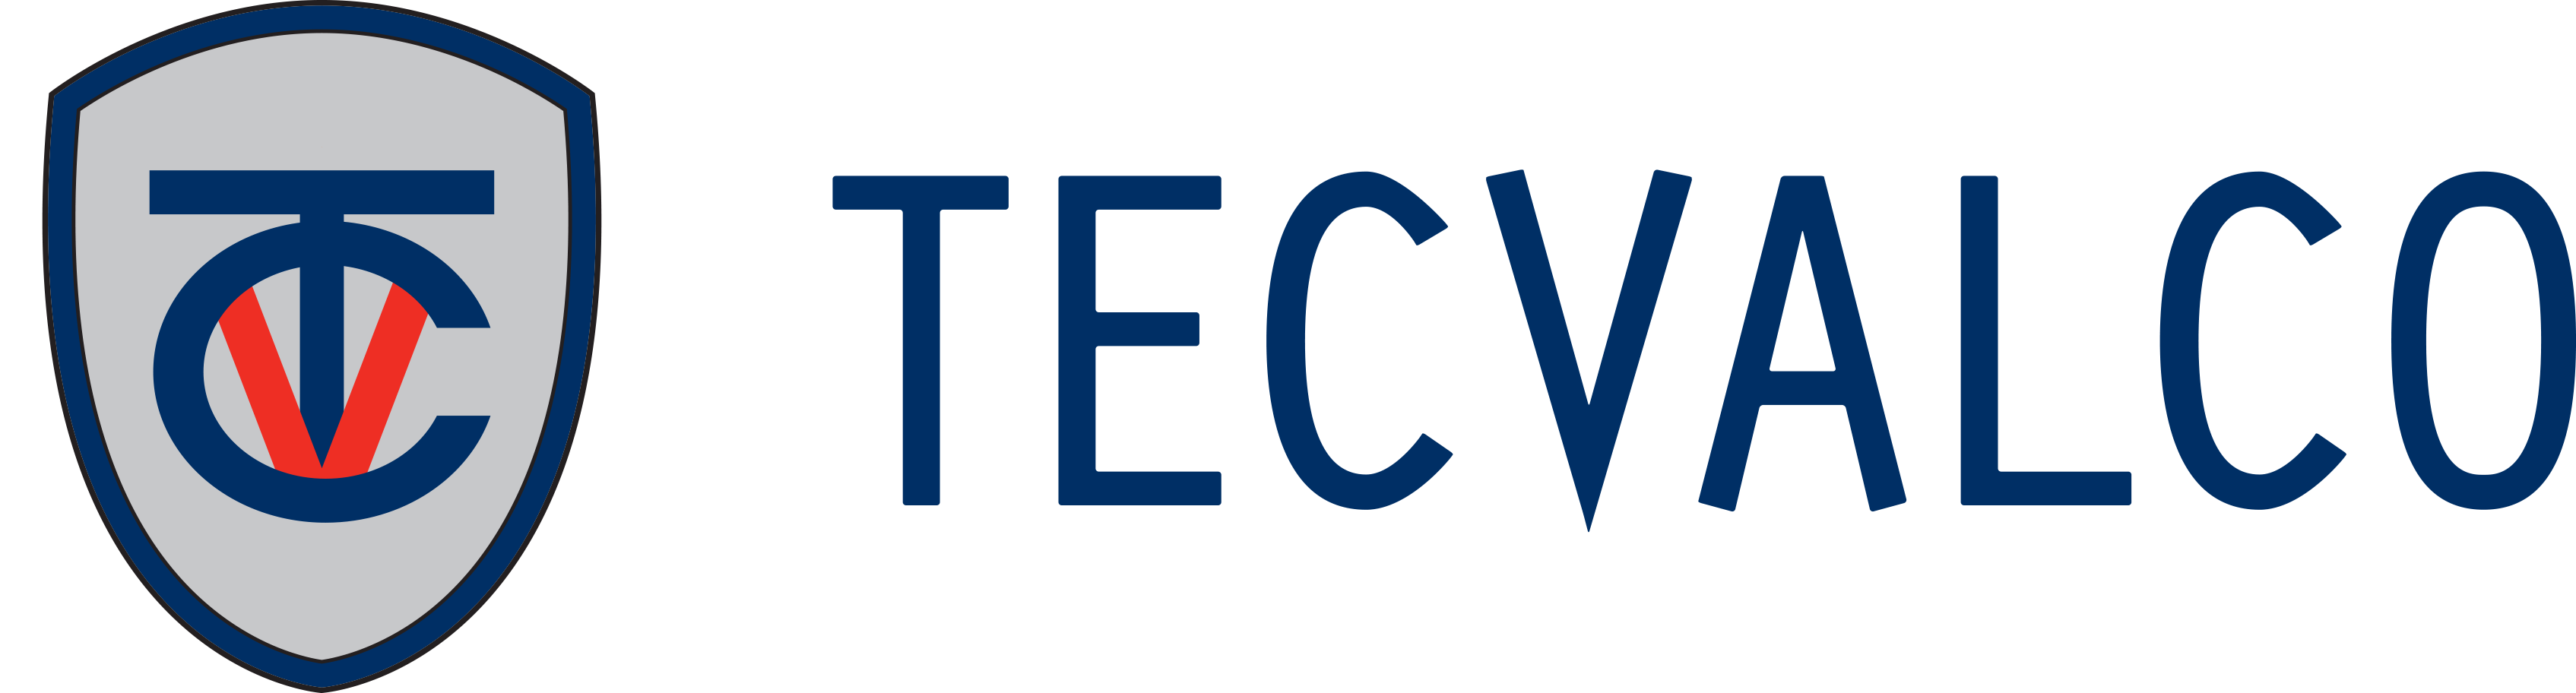 1742-tecvalco-logo-2017-horizontal-spot-colour-16442595601111.png